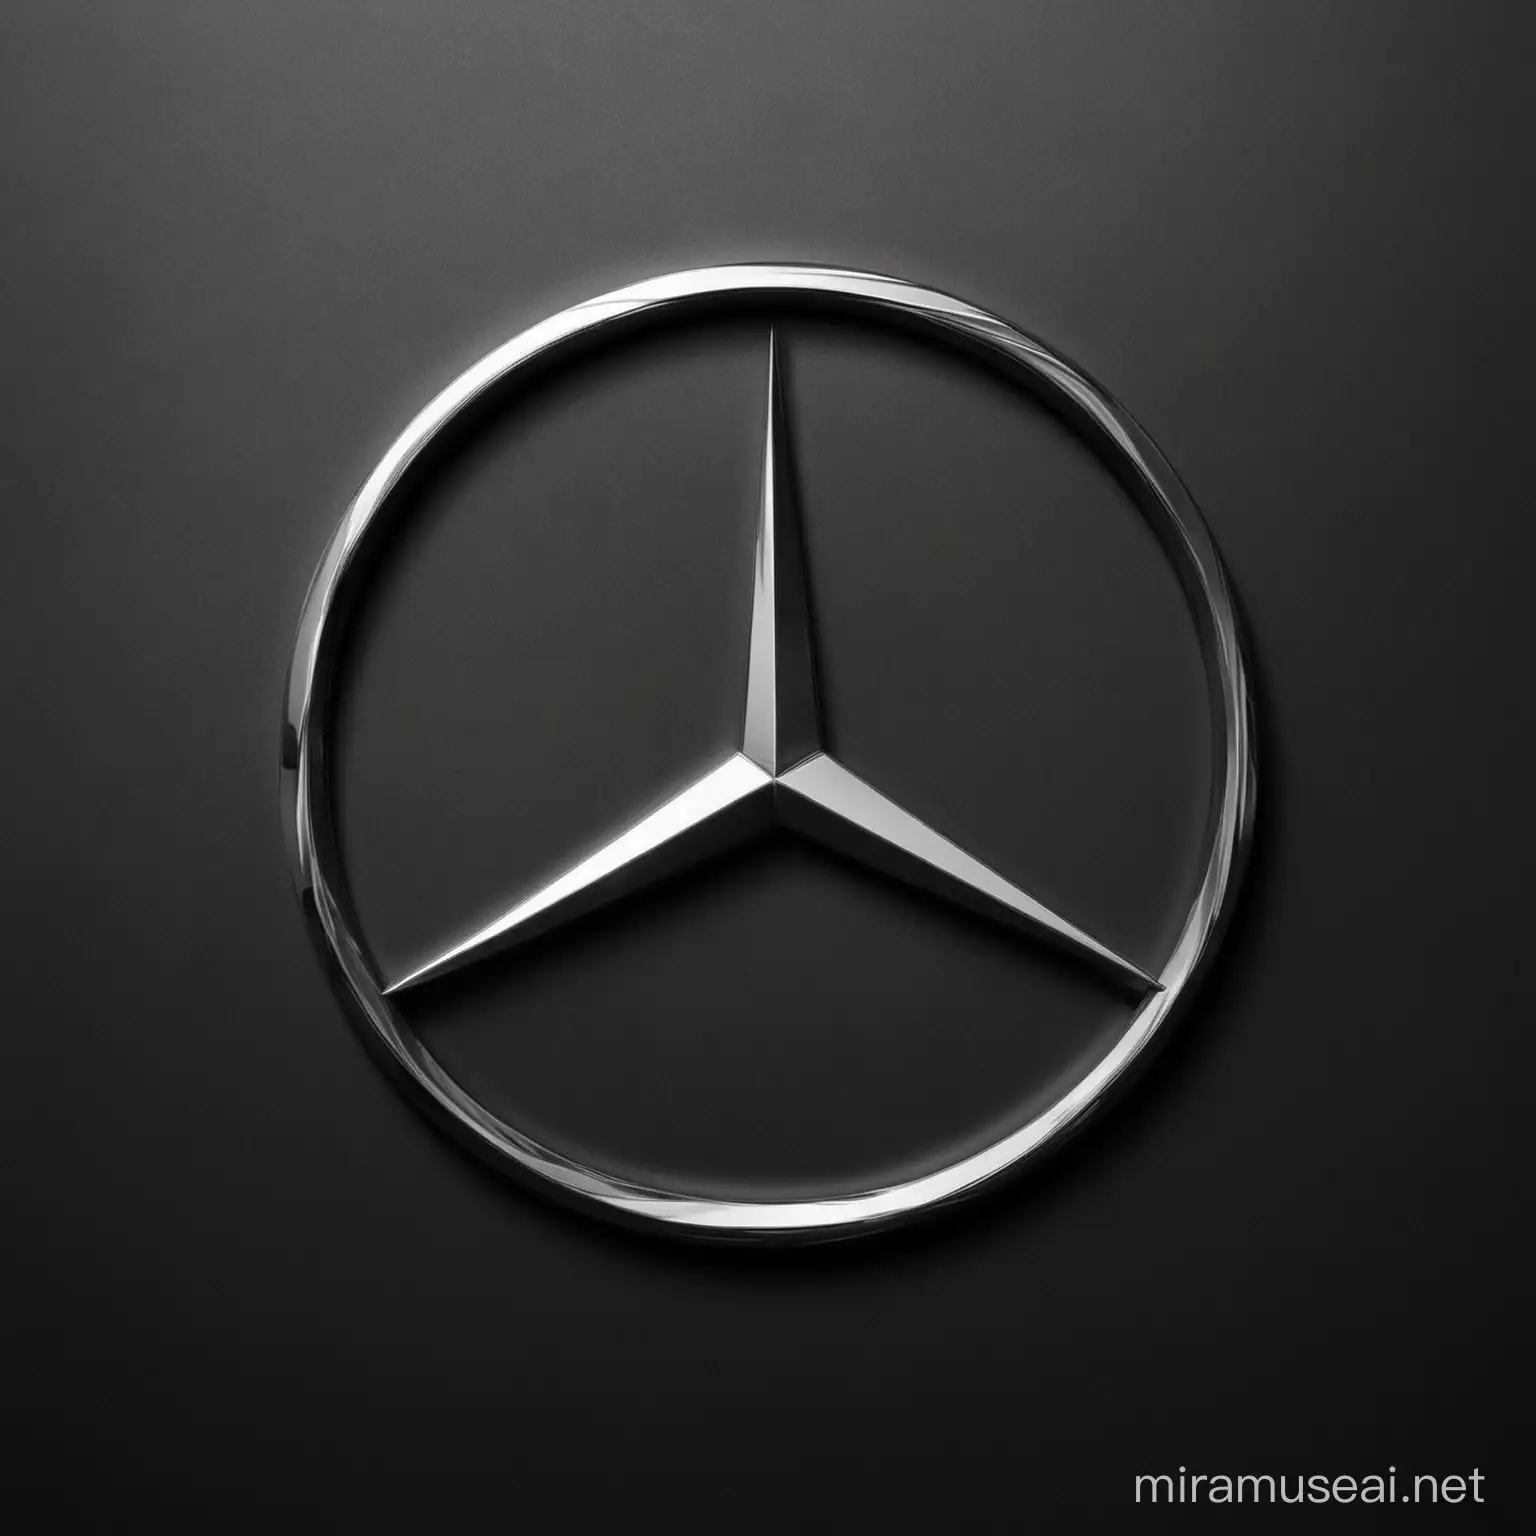 Luxurious Mercedes Benz Logo in Sleek Black Design